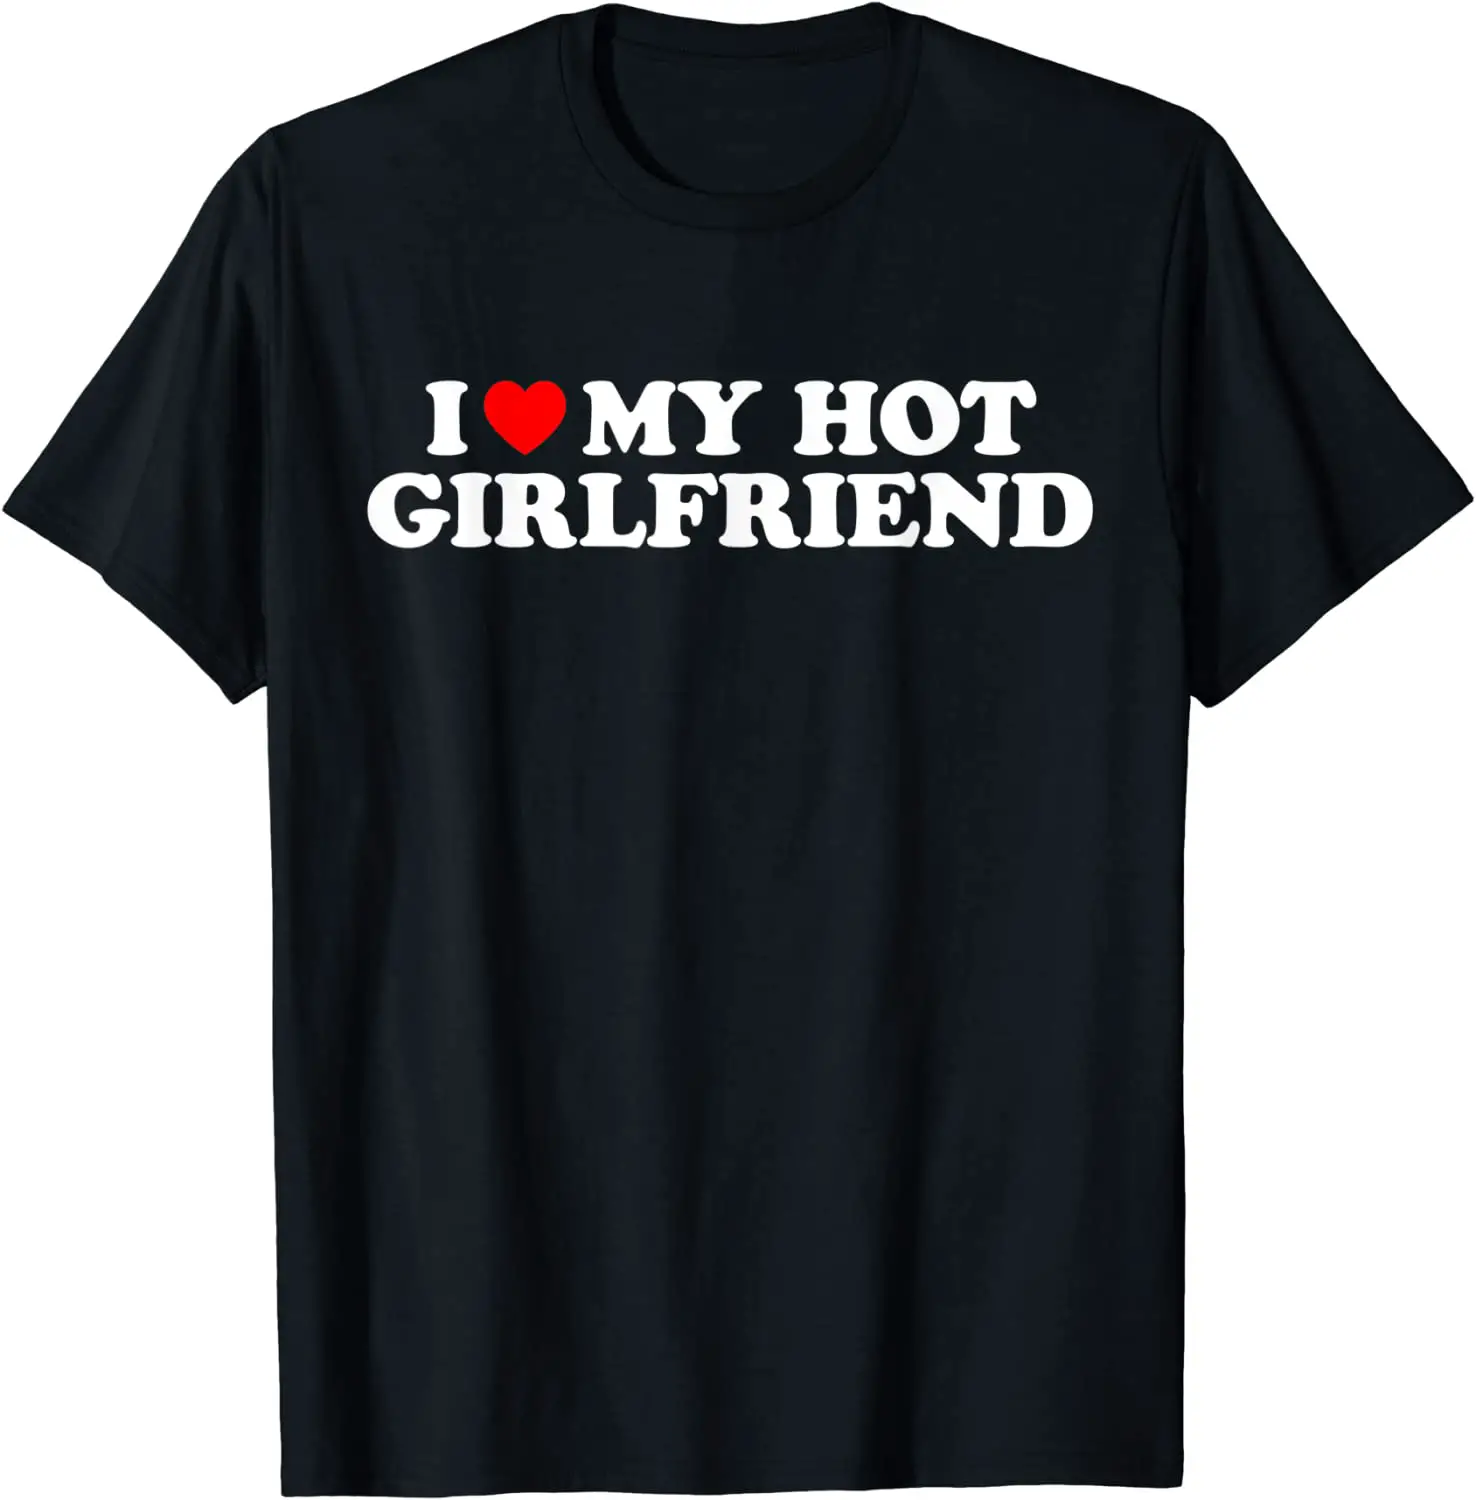 Amazon.com: I Love My Hot Girlfriend Shirt I Heart My Hot Girlfriend T ...